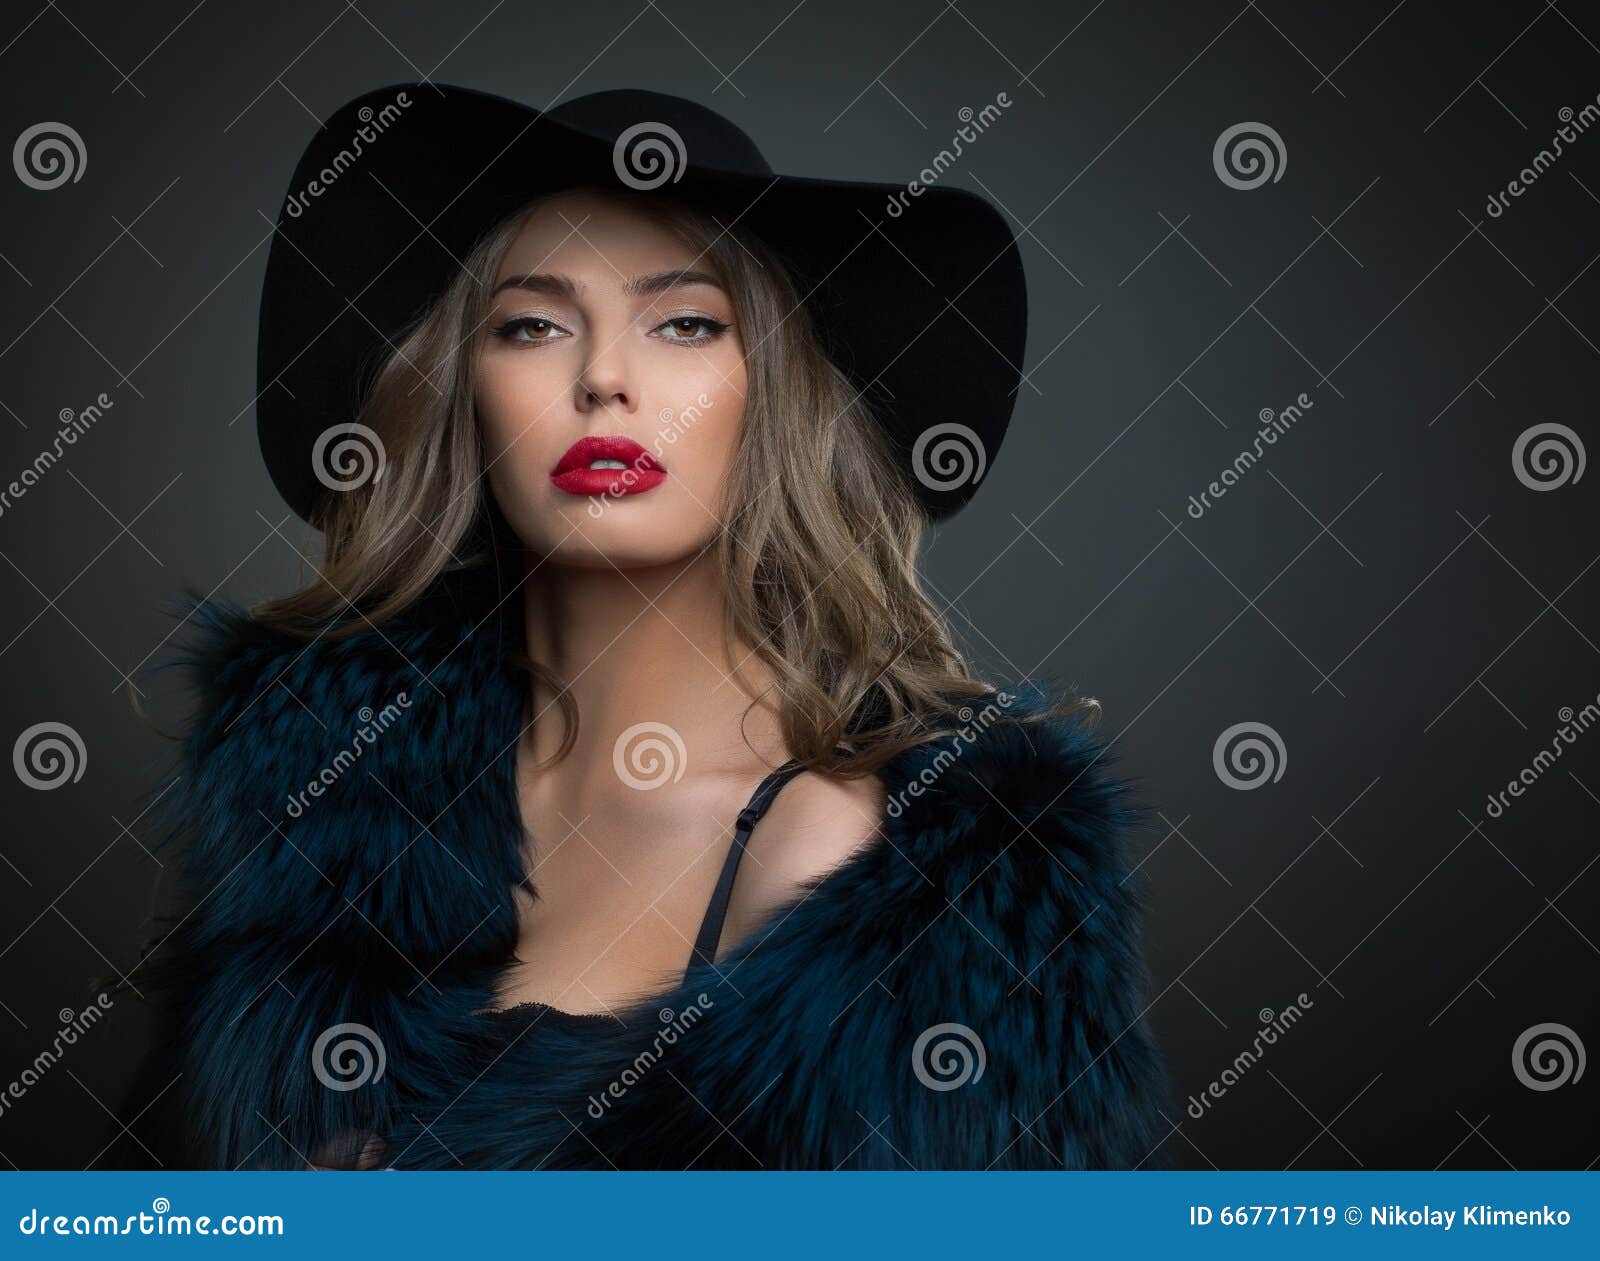 woman in hat on a dark background studo shot